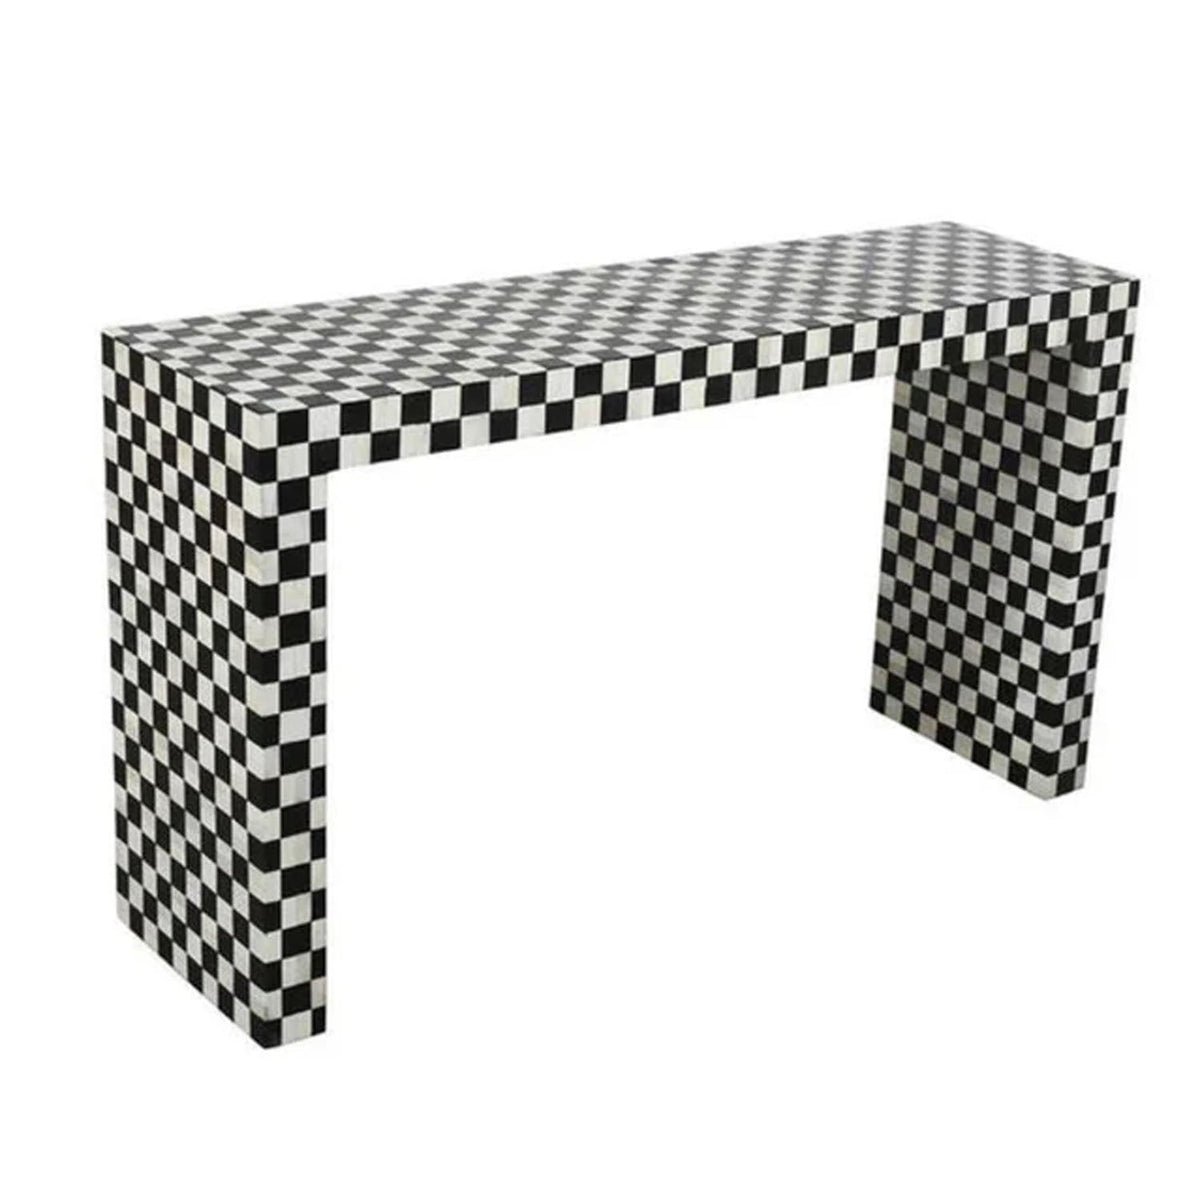 Jenia Bone Inlay Chess Design Console - Black - Notbrand